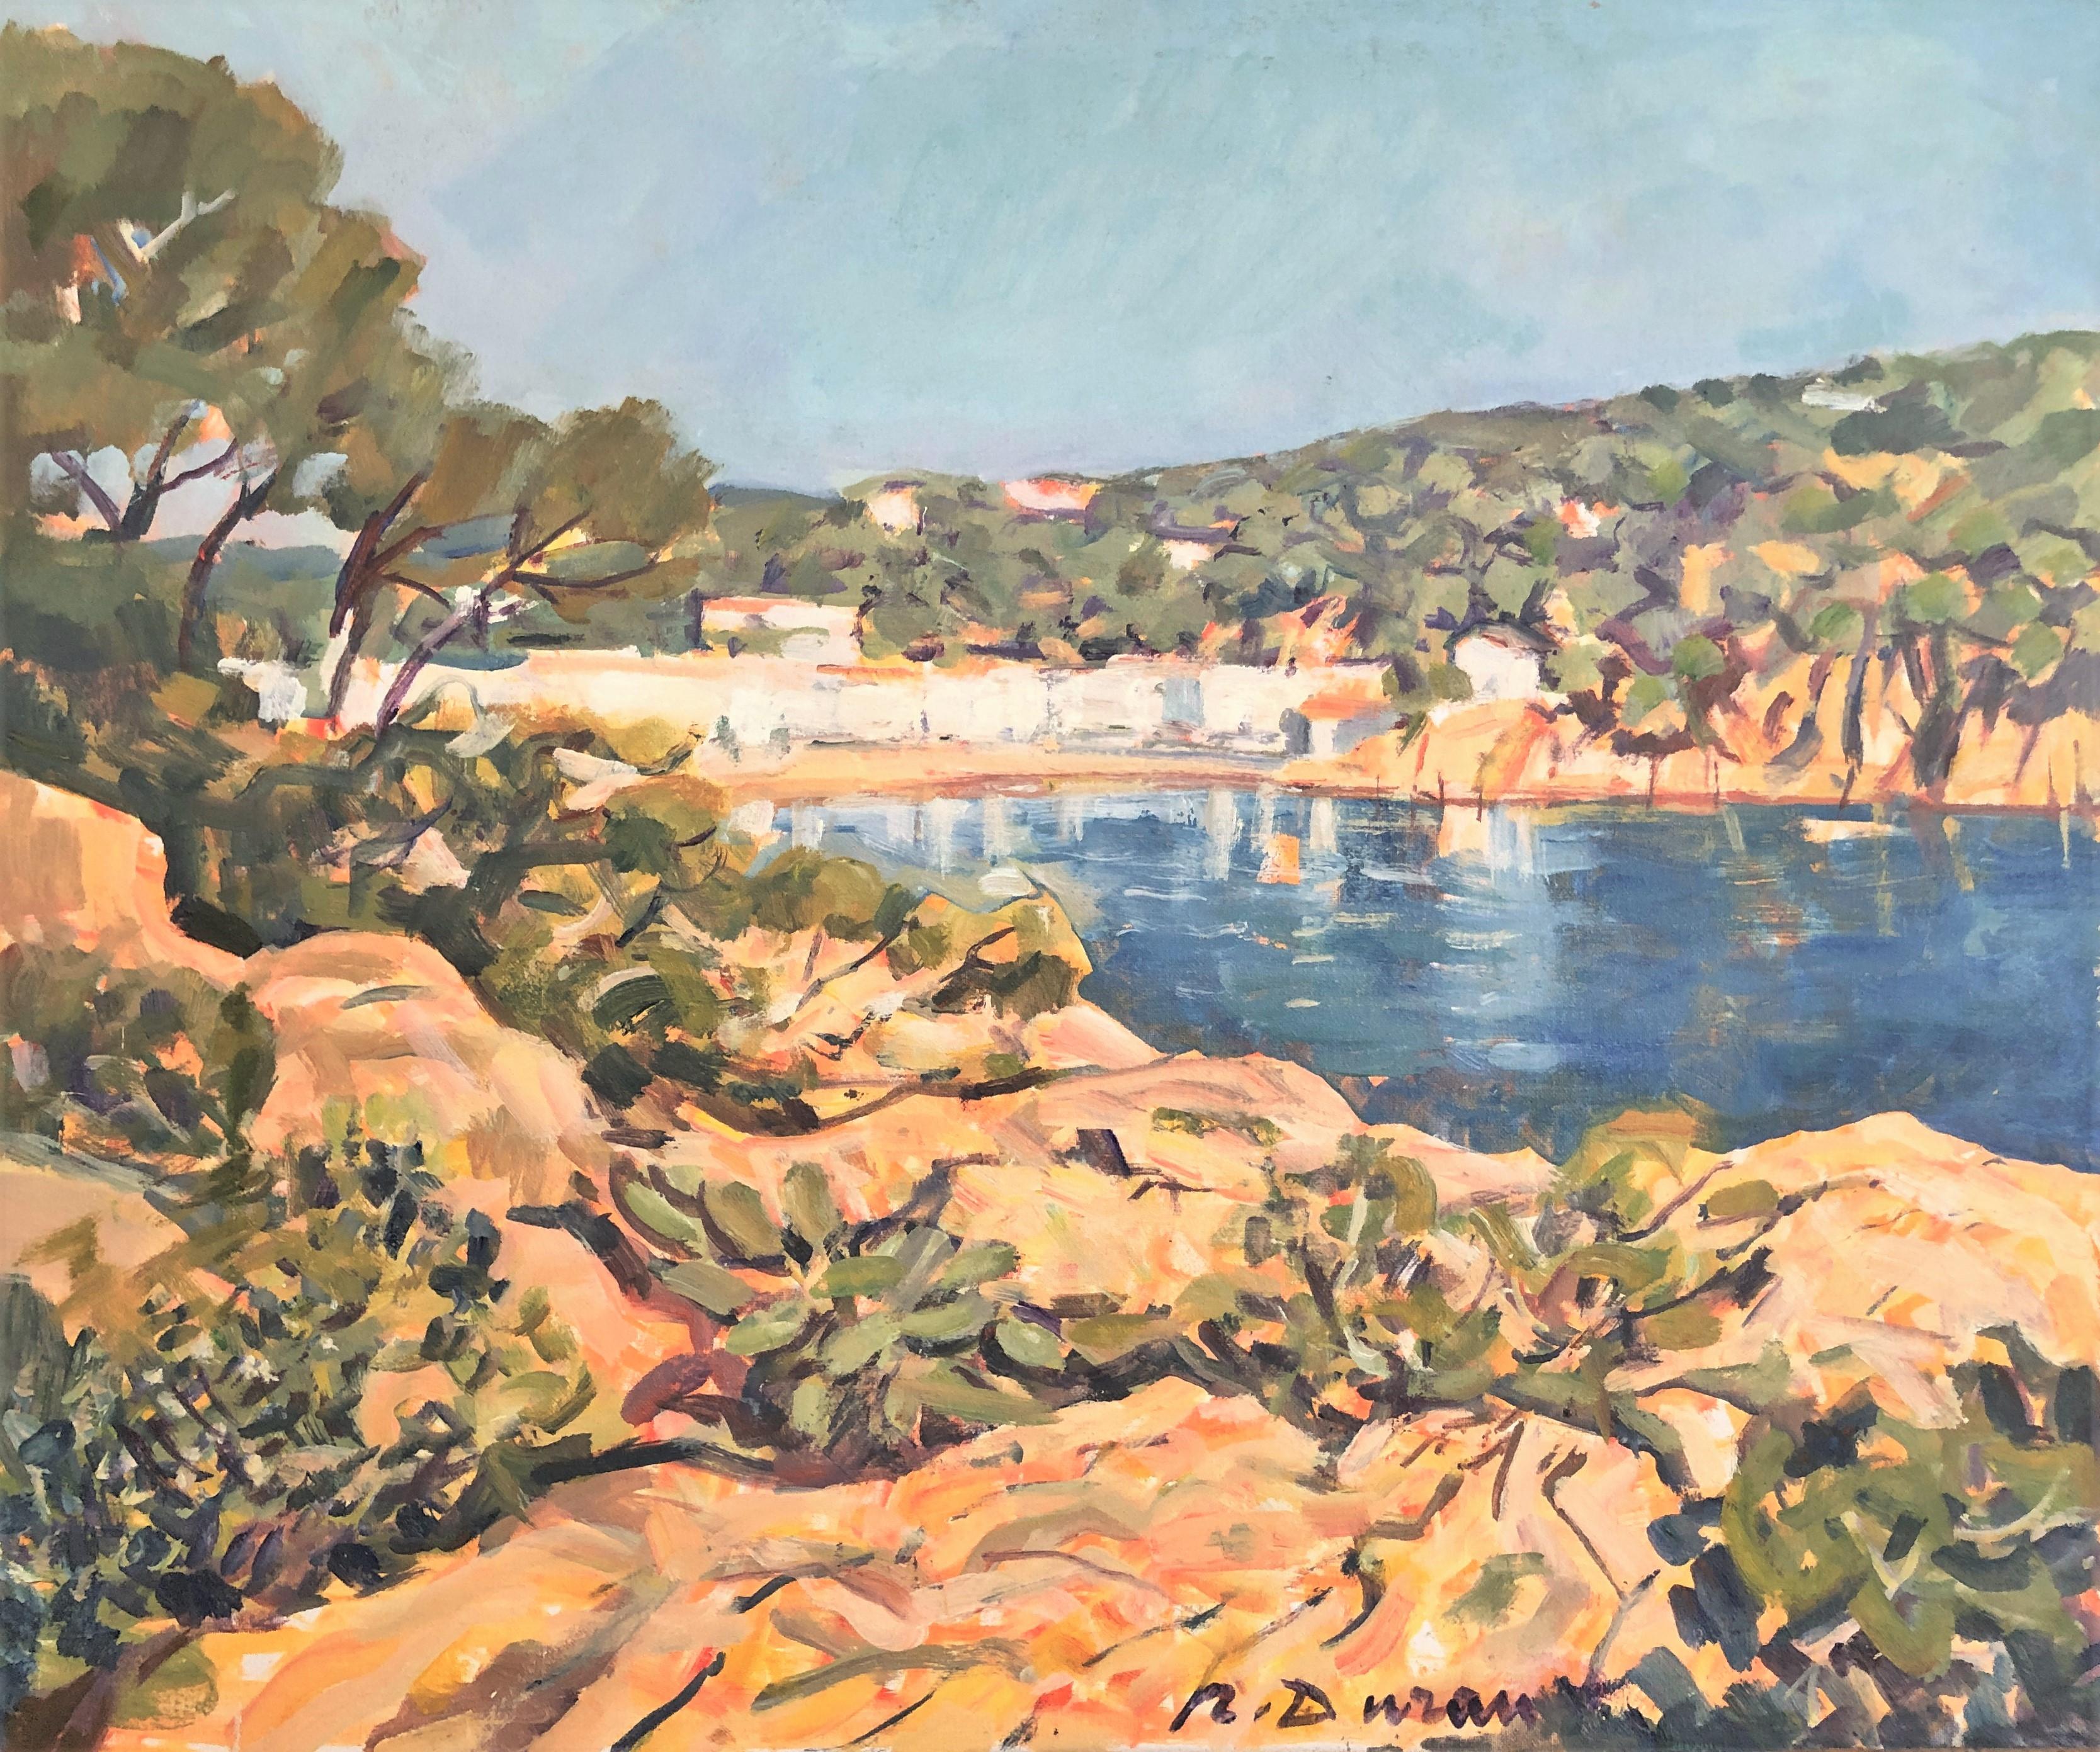 Rafael Duran Benet Landscape Painting - Landscape with lake oil painting seascape